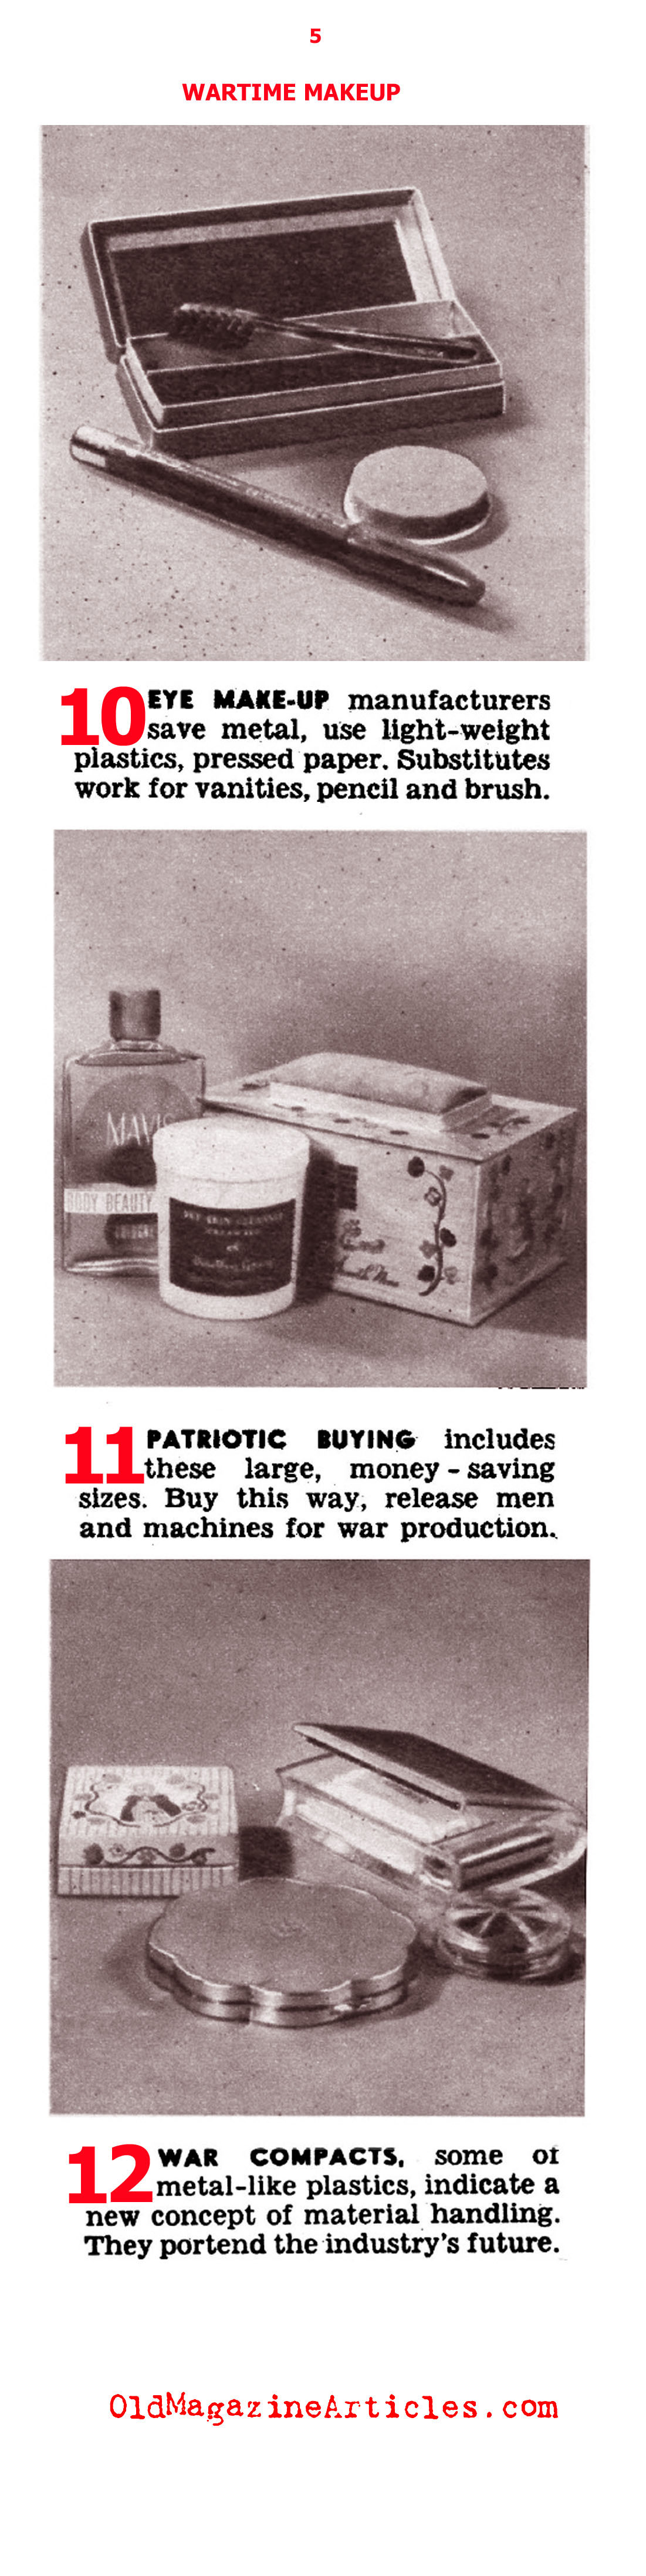 1940s Makeup and W.W. II (Click Magazine, 1942)